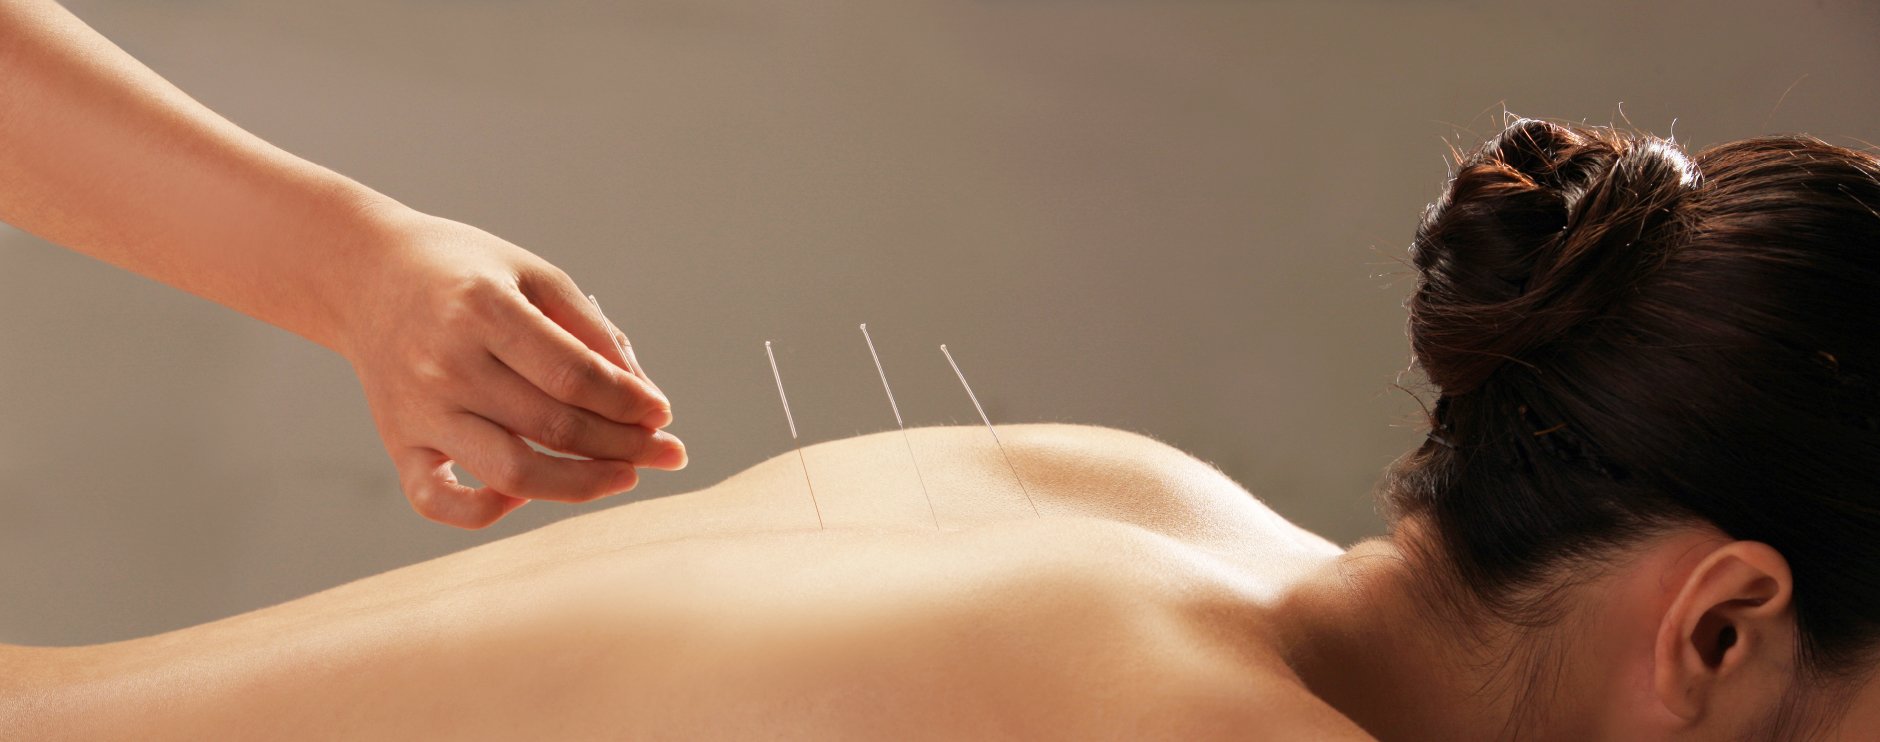 Medicina Tradicional Chinesa/Acupunctura